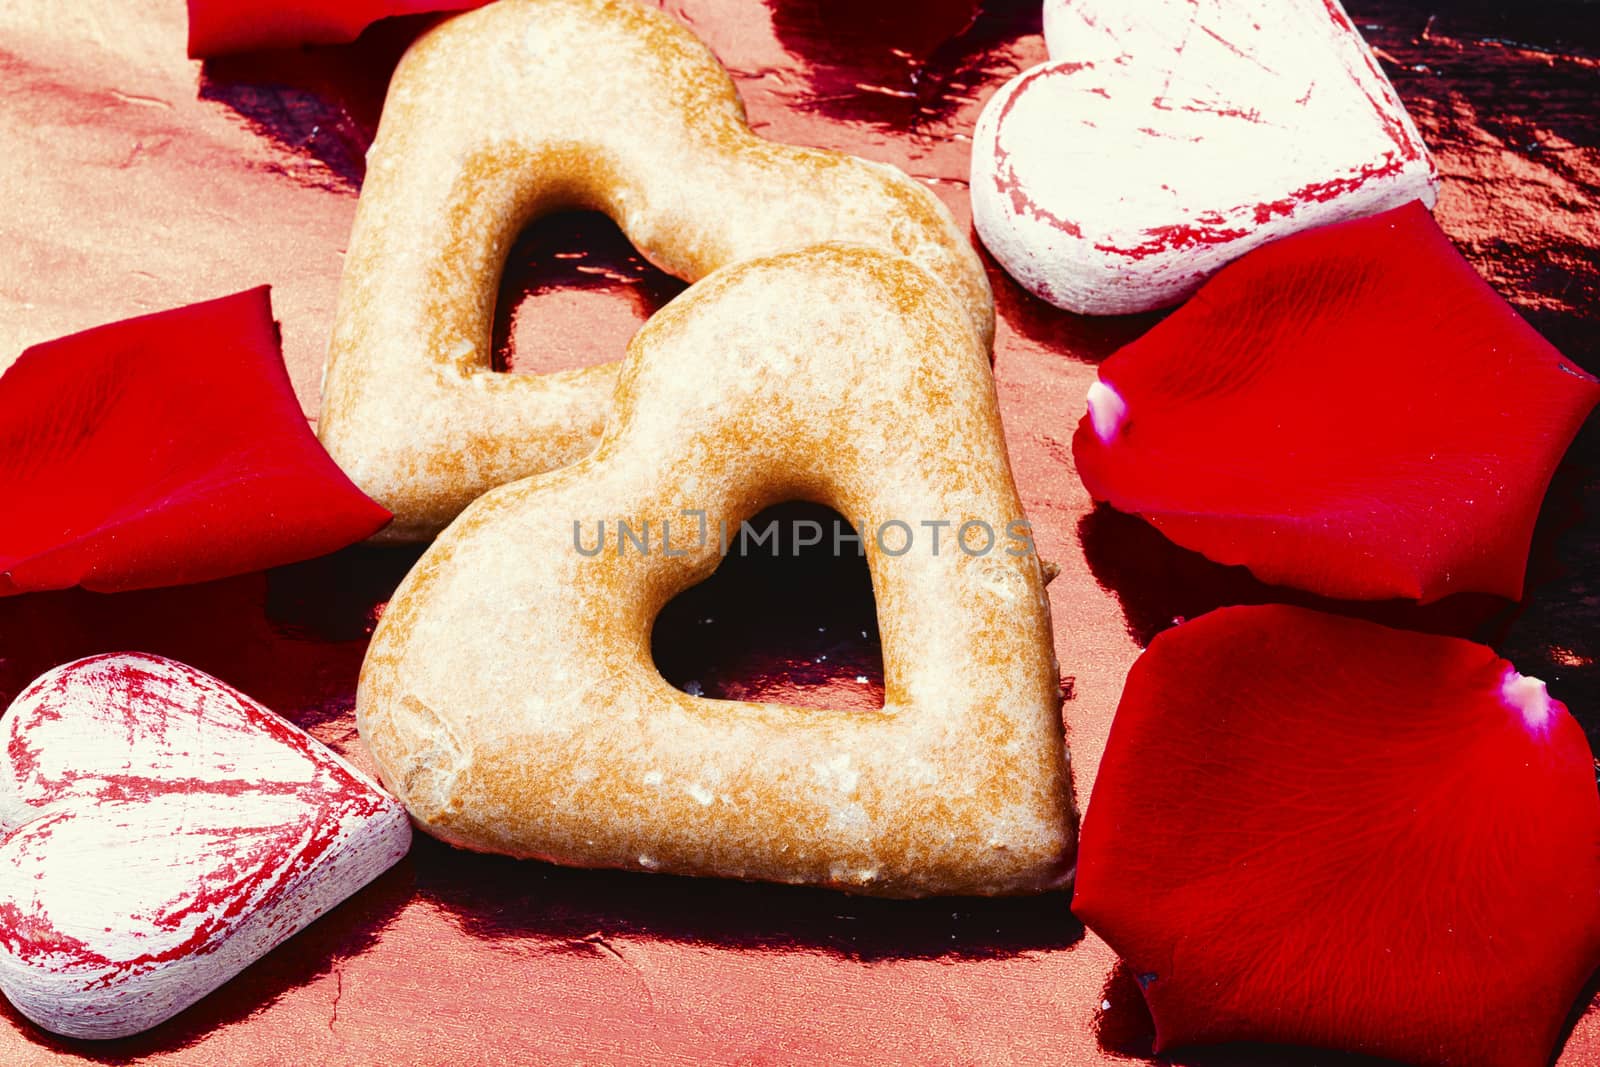 Homemade valentine cookies by LMykola